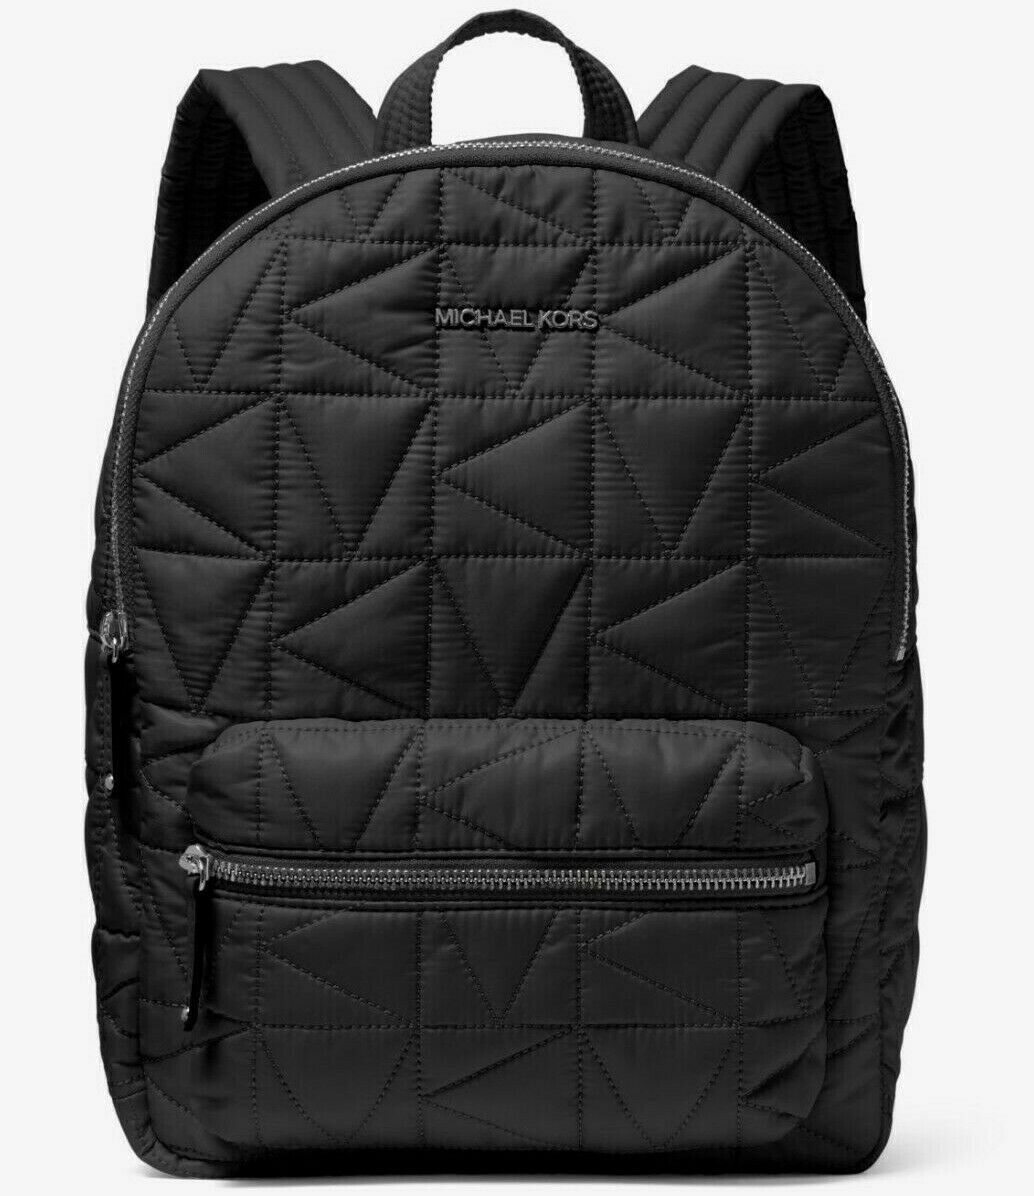 NWB Michael Kors Winnie MD Quilted Nylon Black Backpack 35T0UW4B2C Dust Bag FS